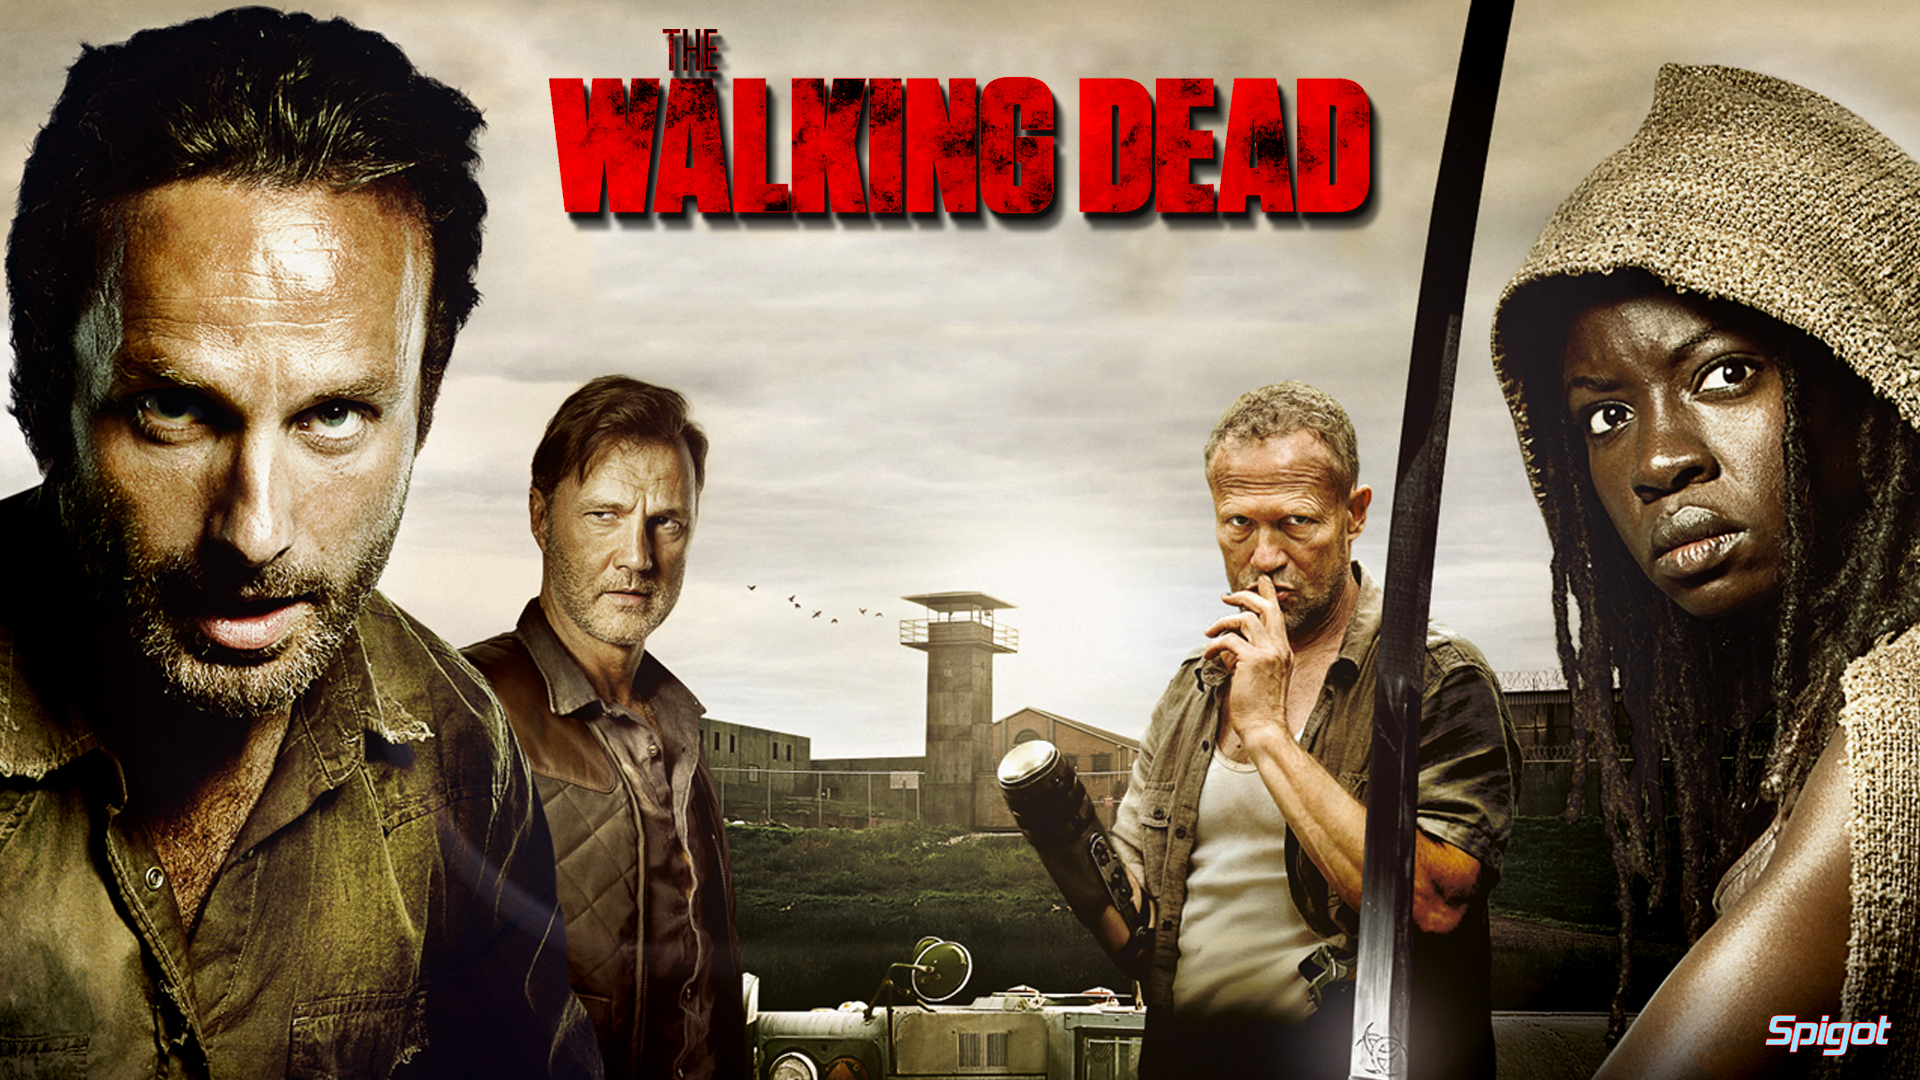 The Walking Dead Wallpaper HD 1080p Imagebank Biz